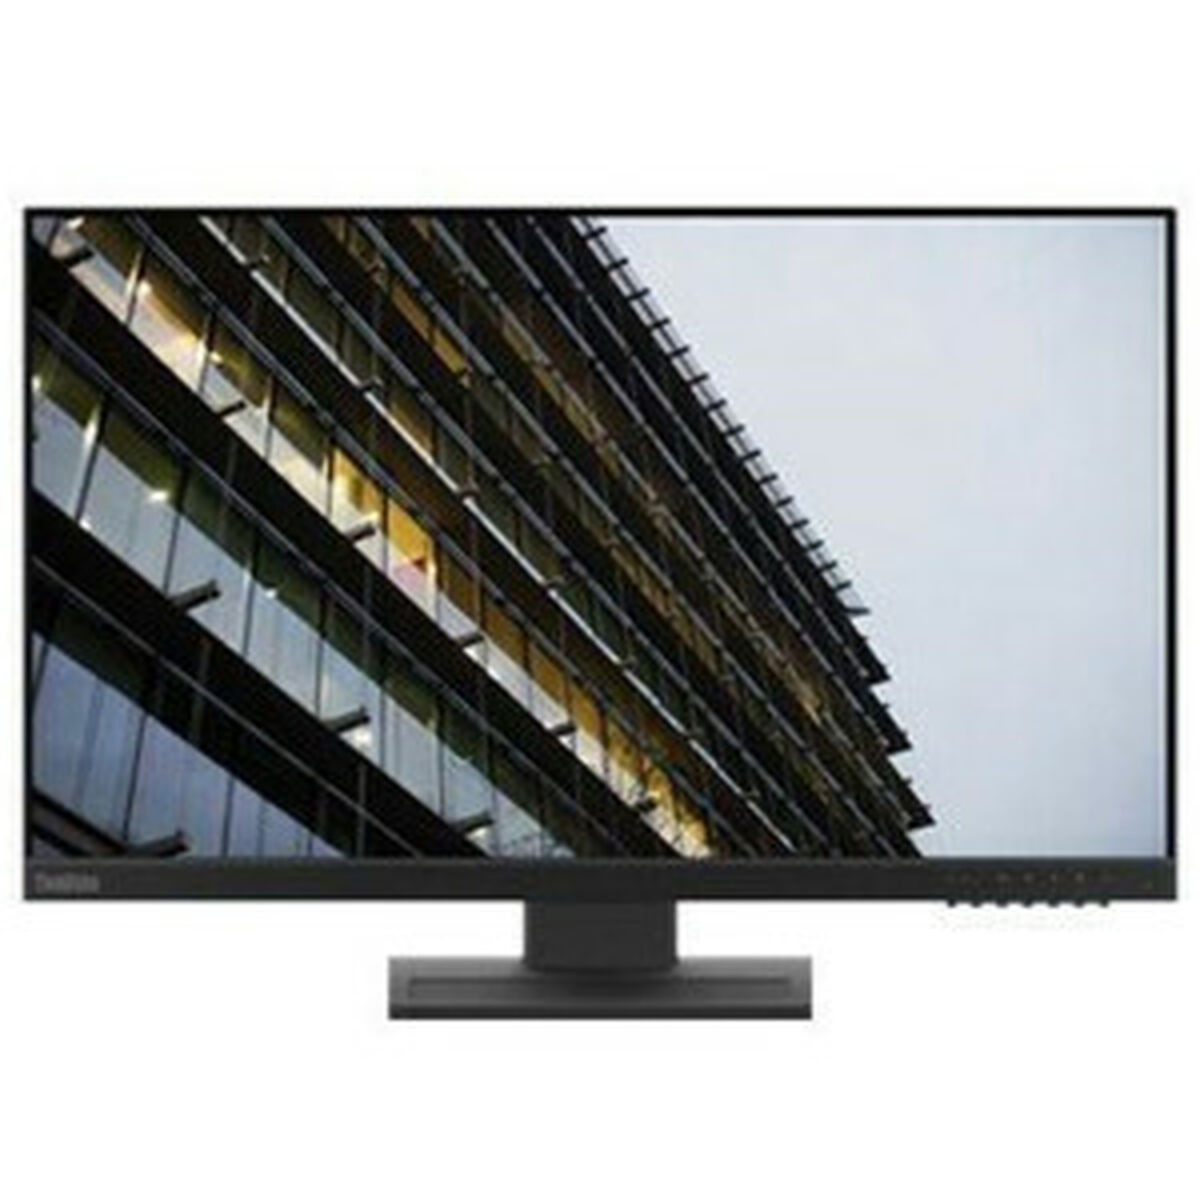 Lenovo ThinkVision E24-28 61 cm (24 Zoll) Monitor (Full HD, 6ms Reaktionszeit)